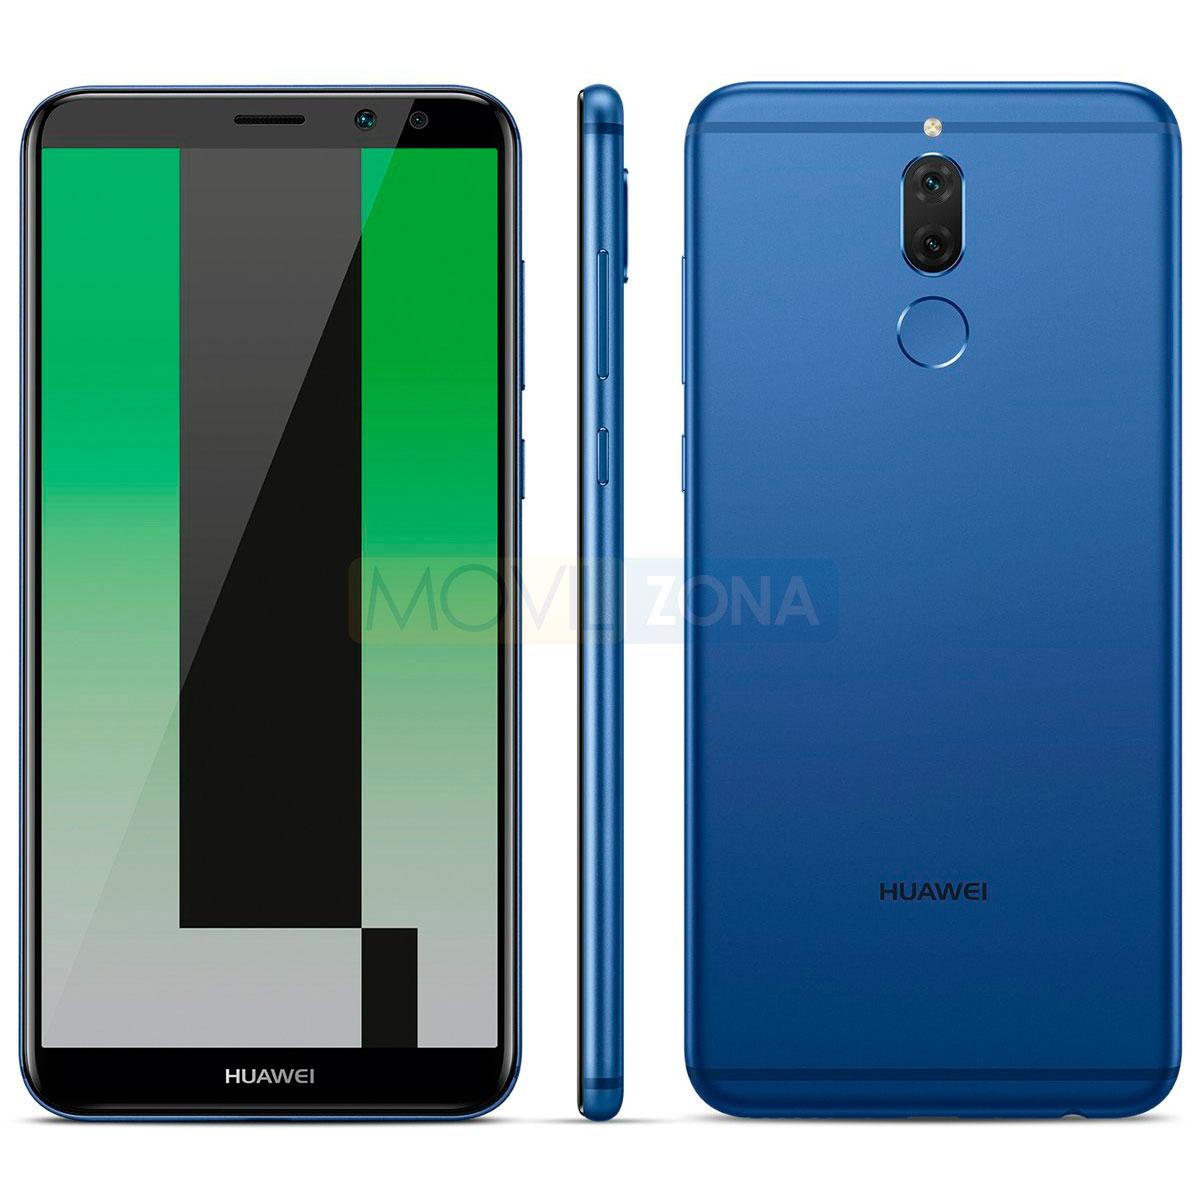 Huawei Mate 10 Lite negro y azul